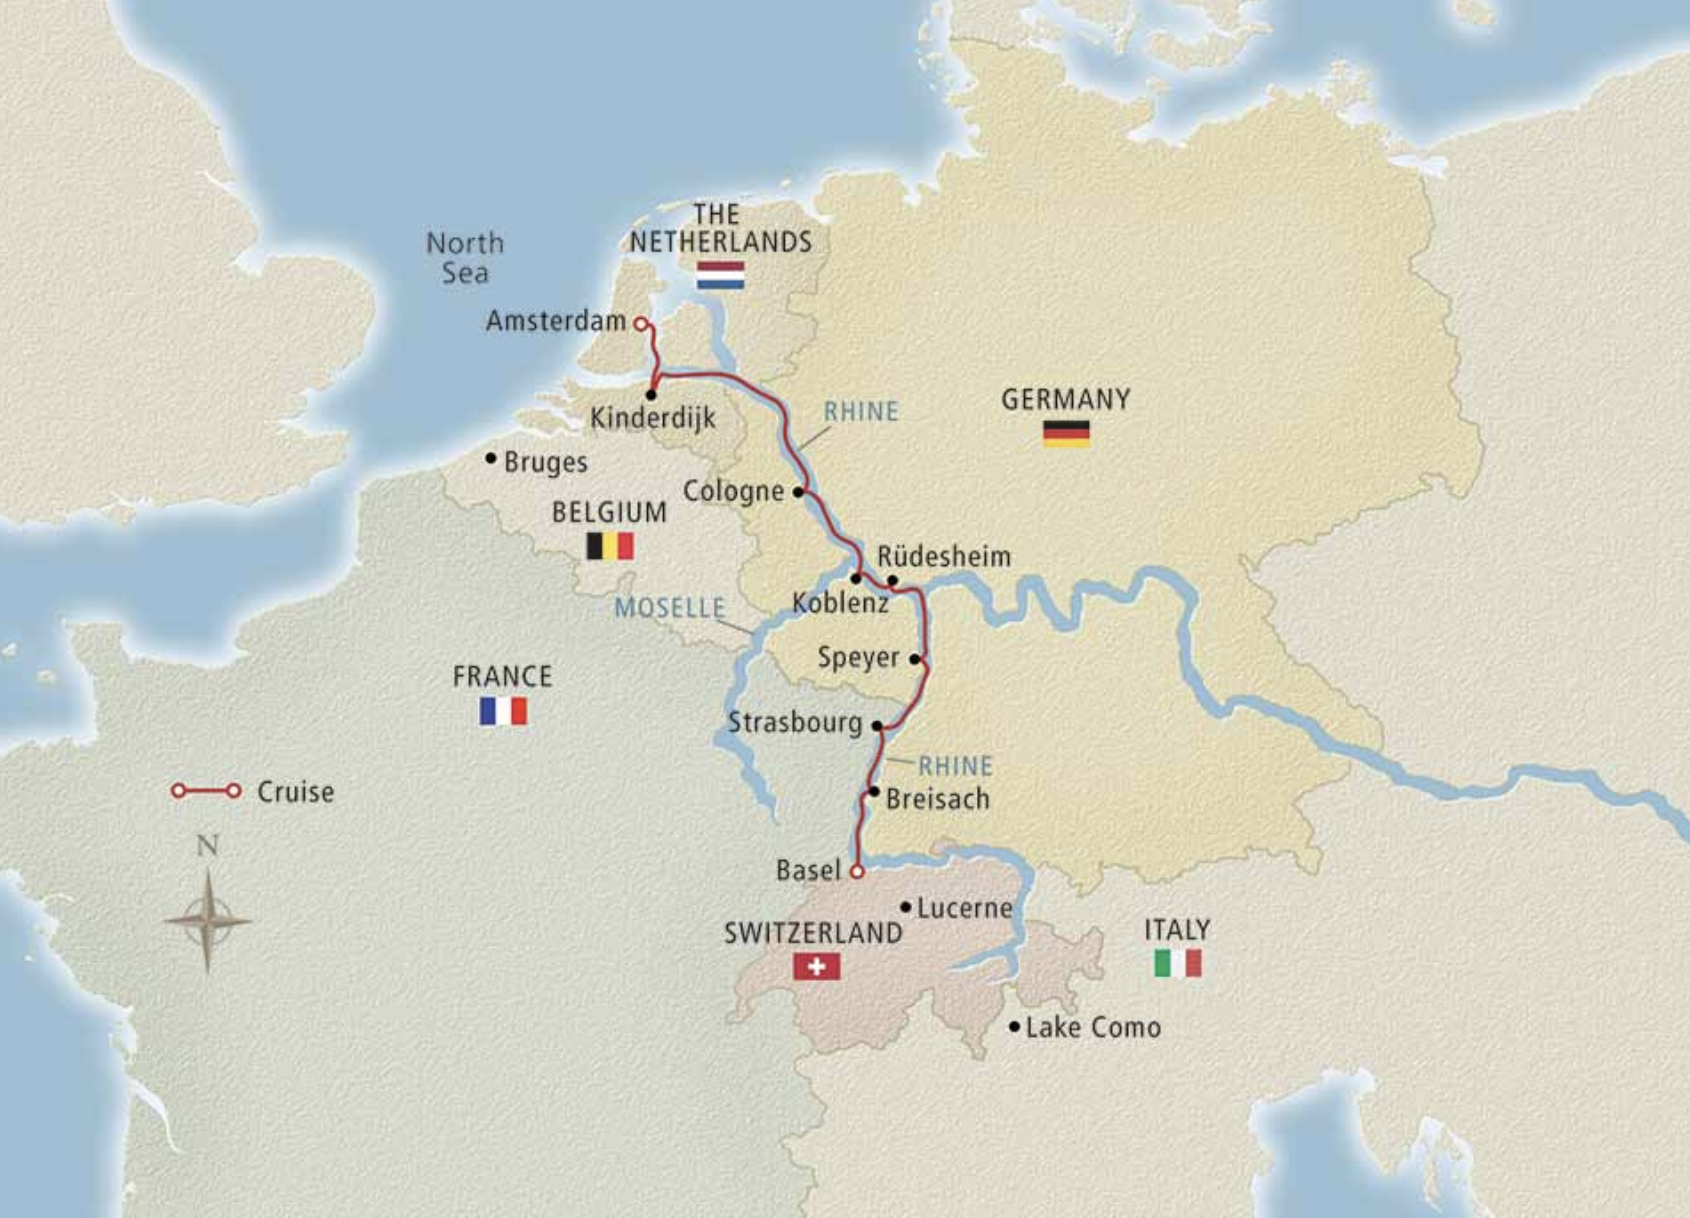 Viking Rhine River Valley Amsterdam to Basel Cruise kellyelko.com #myvikingstory #rivercruise #vikingcruise #rhinerivercruise #travelblog #travelblogger #travel #vacation #europe #europeanvacation 